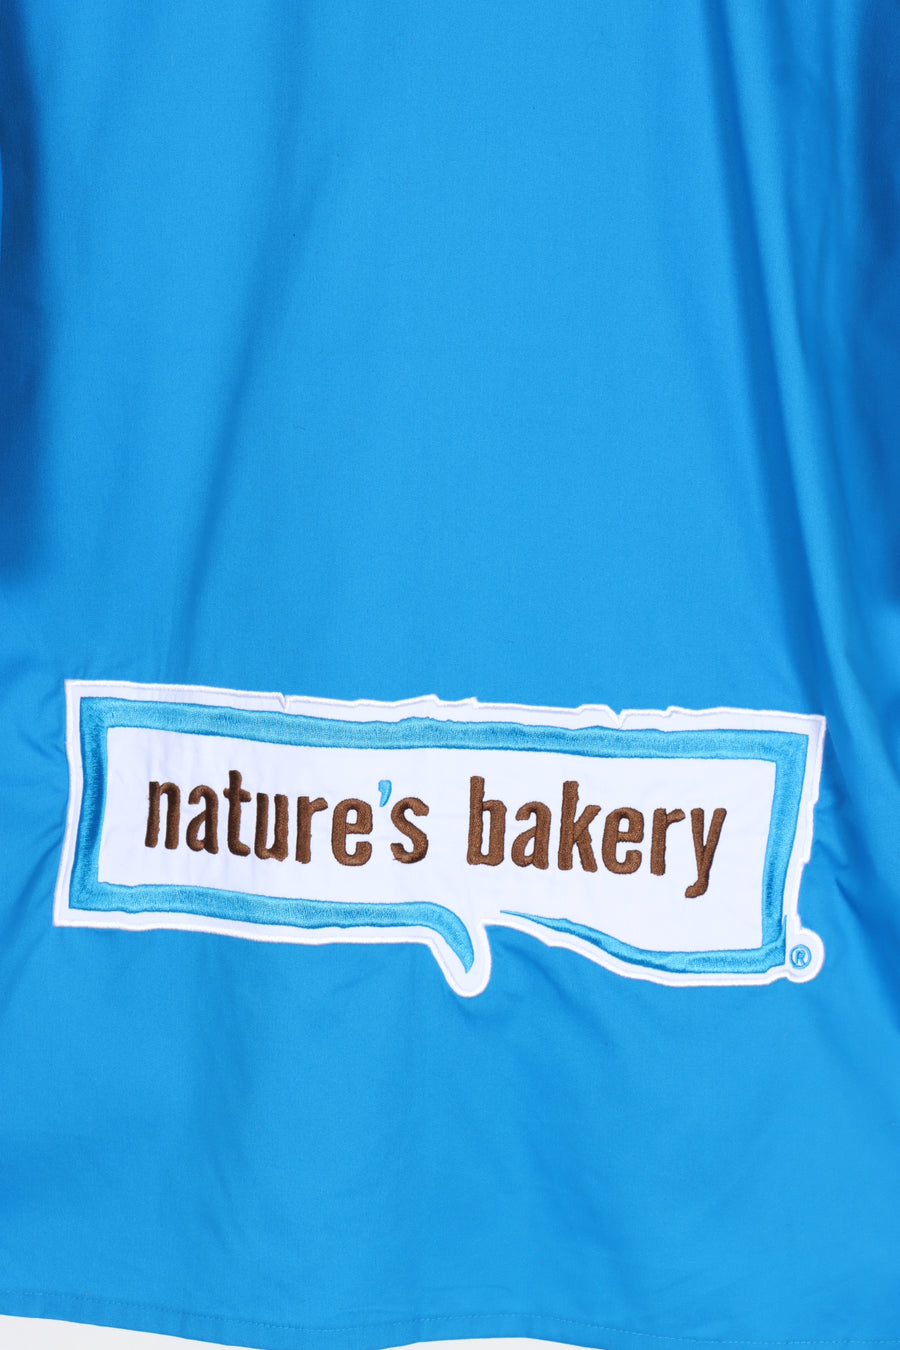 NASCAR Stewart Haas Racing Nature's Bakery Embroidered Racing Shirt (XXL)